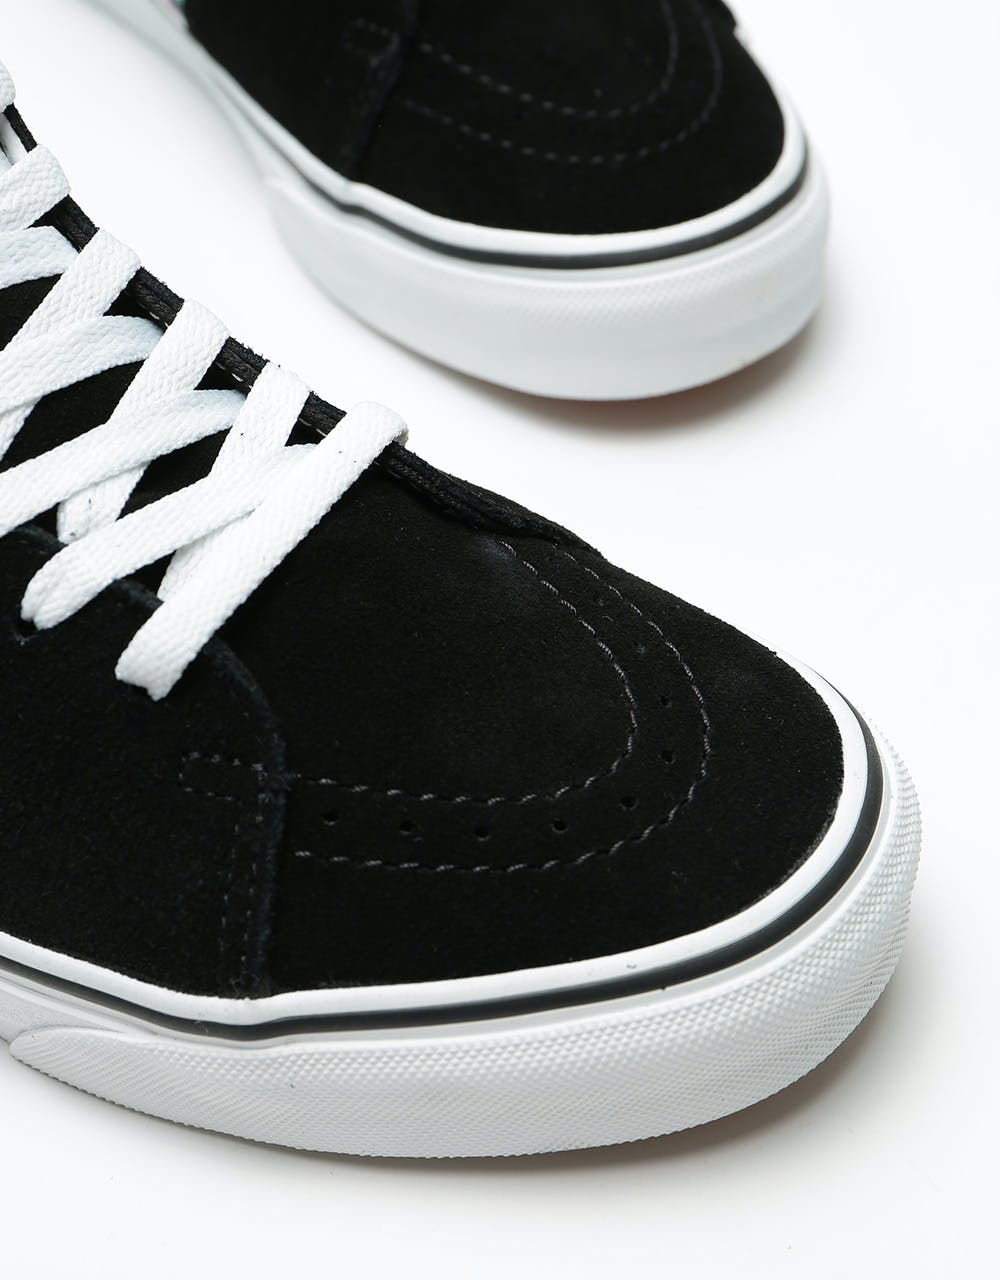 Vans Sk8-Hi Skate Shoes - (Iridescent Check) Black/True White